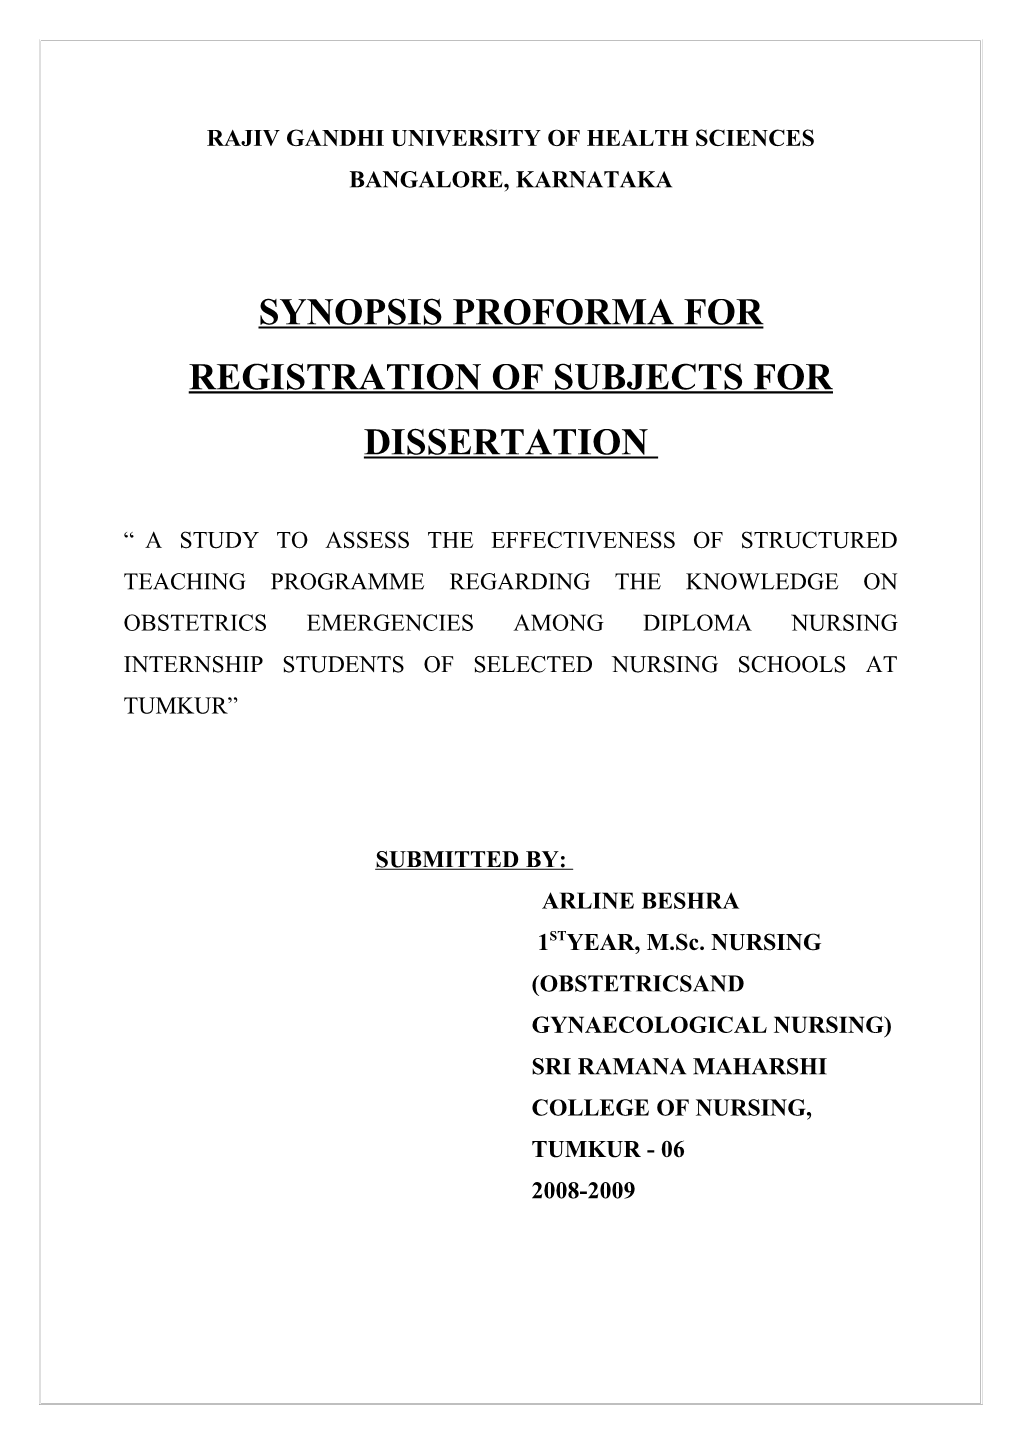 Synopisi for Registration